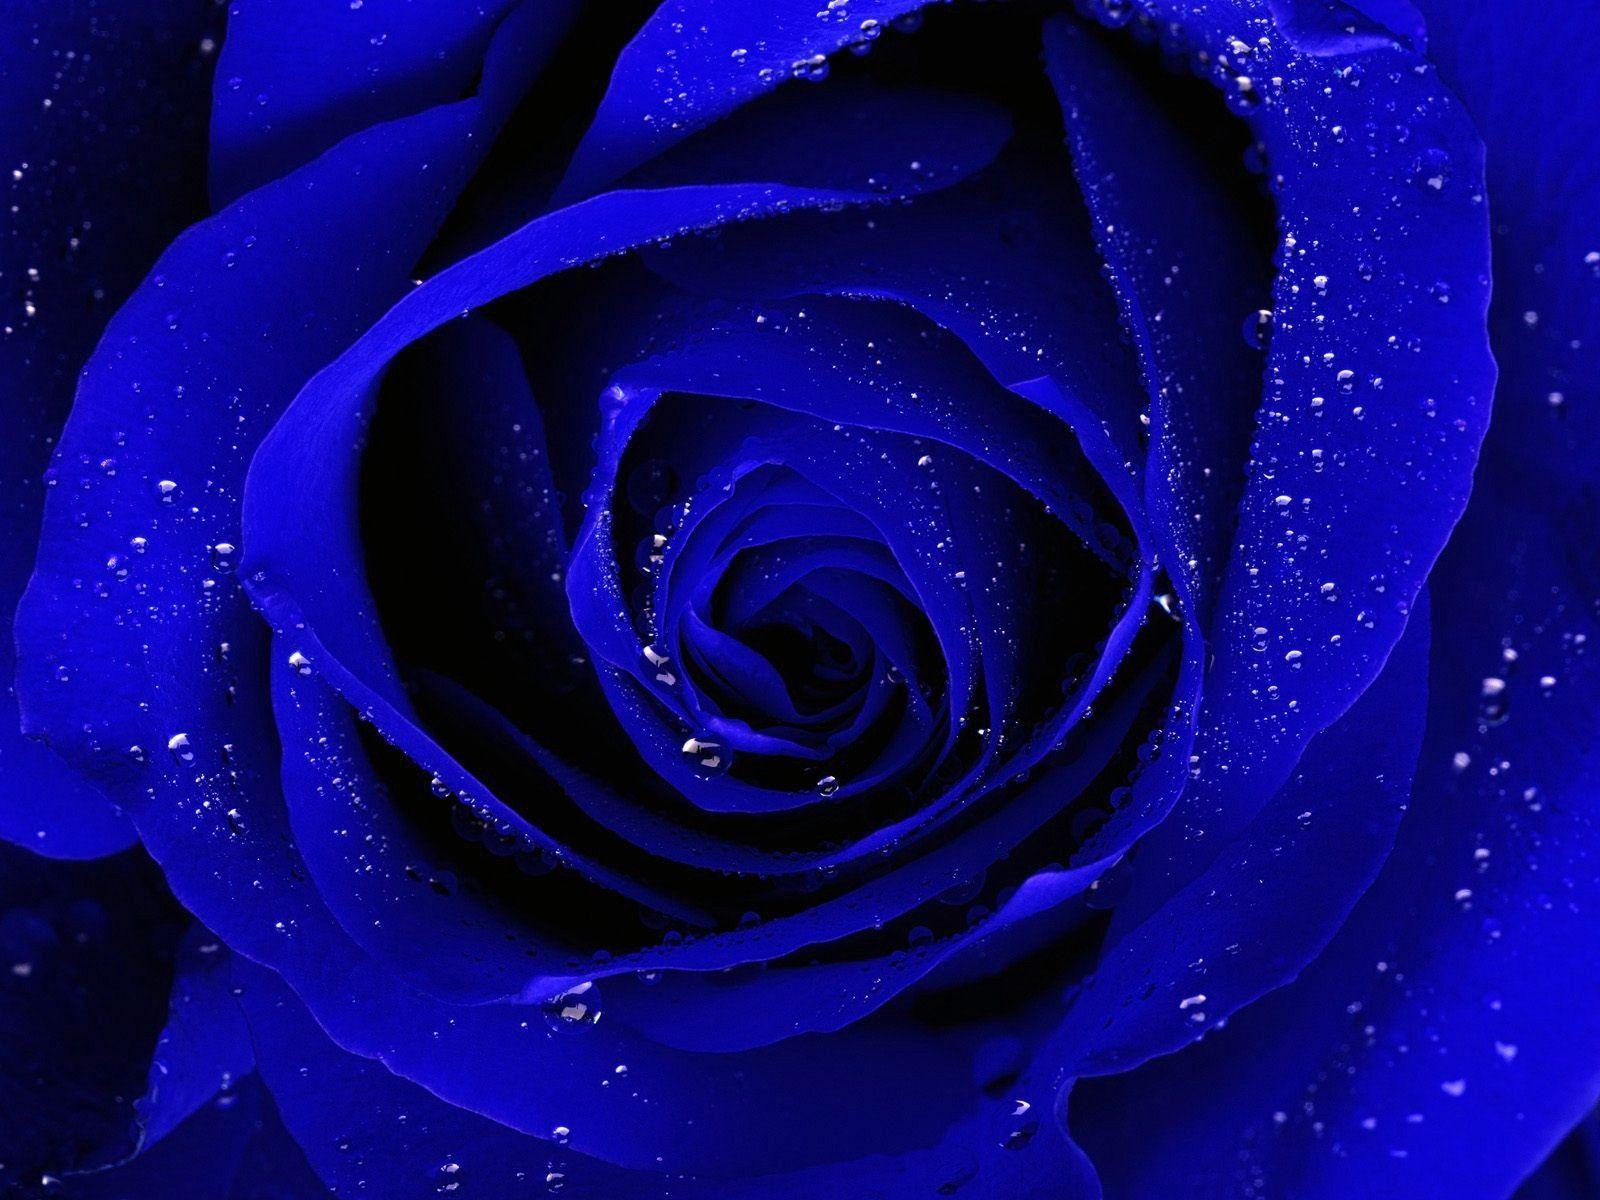 Blue Rose Images Hd Wallpaper Download ~ Free Download Rose Wallpaper ...